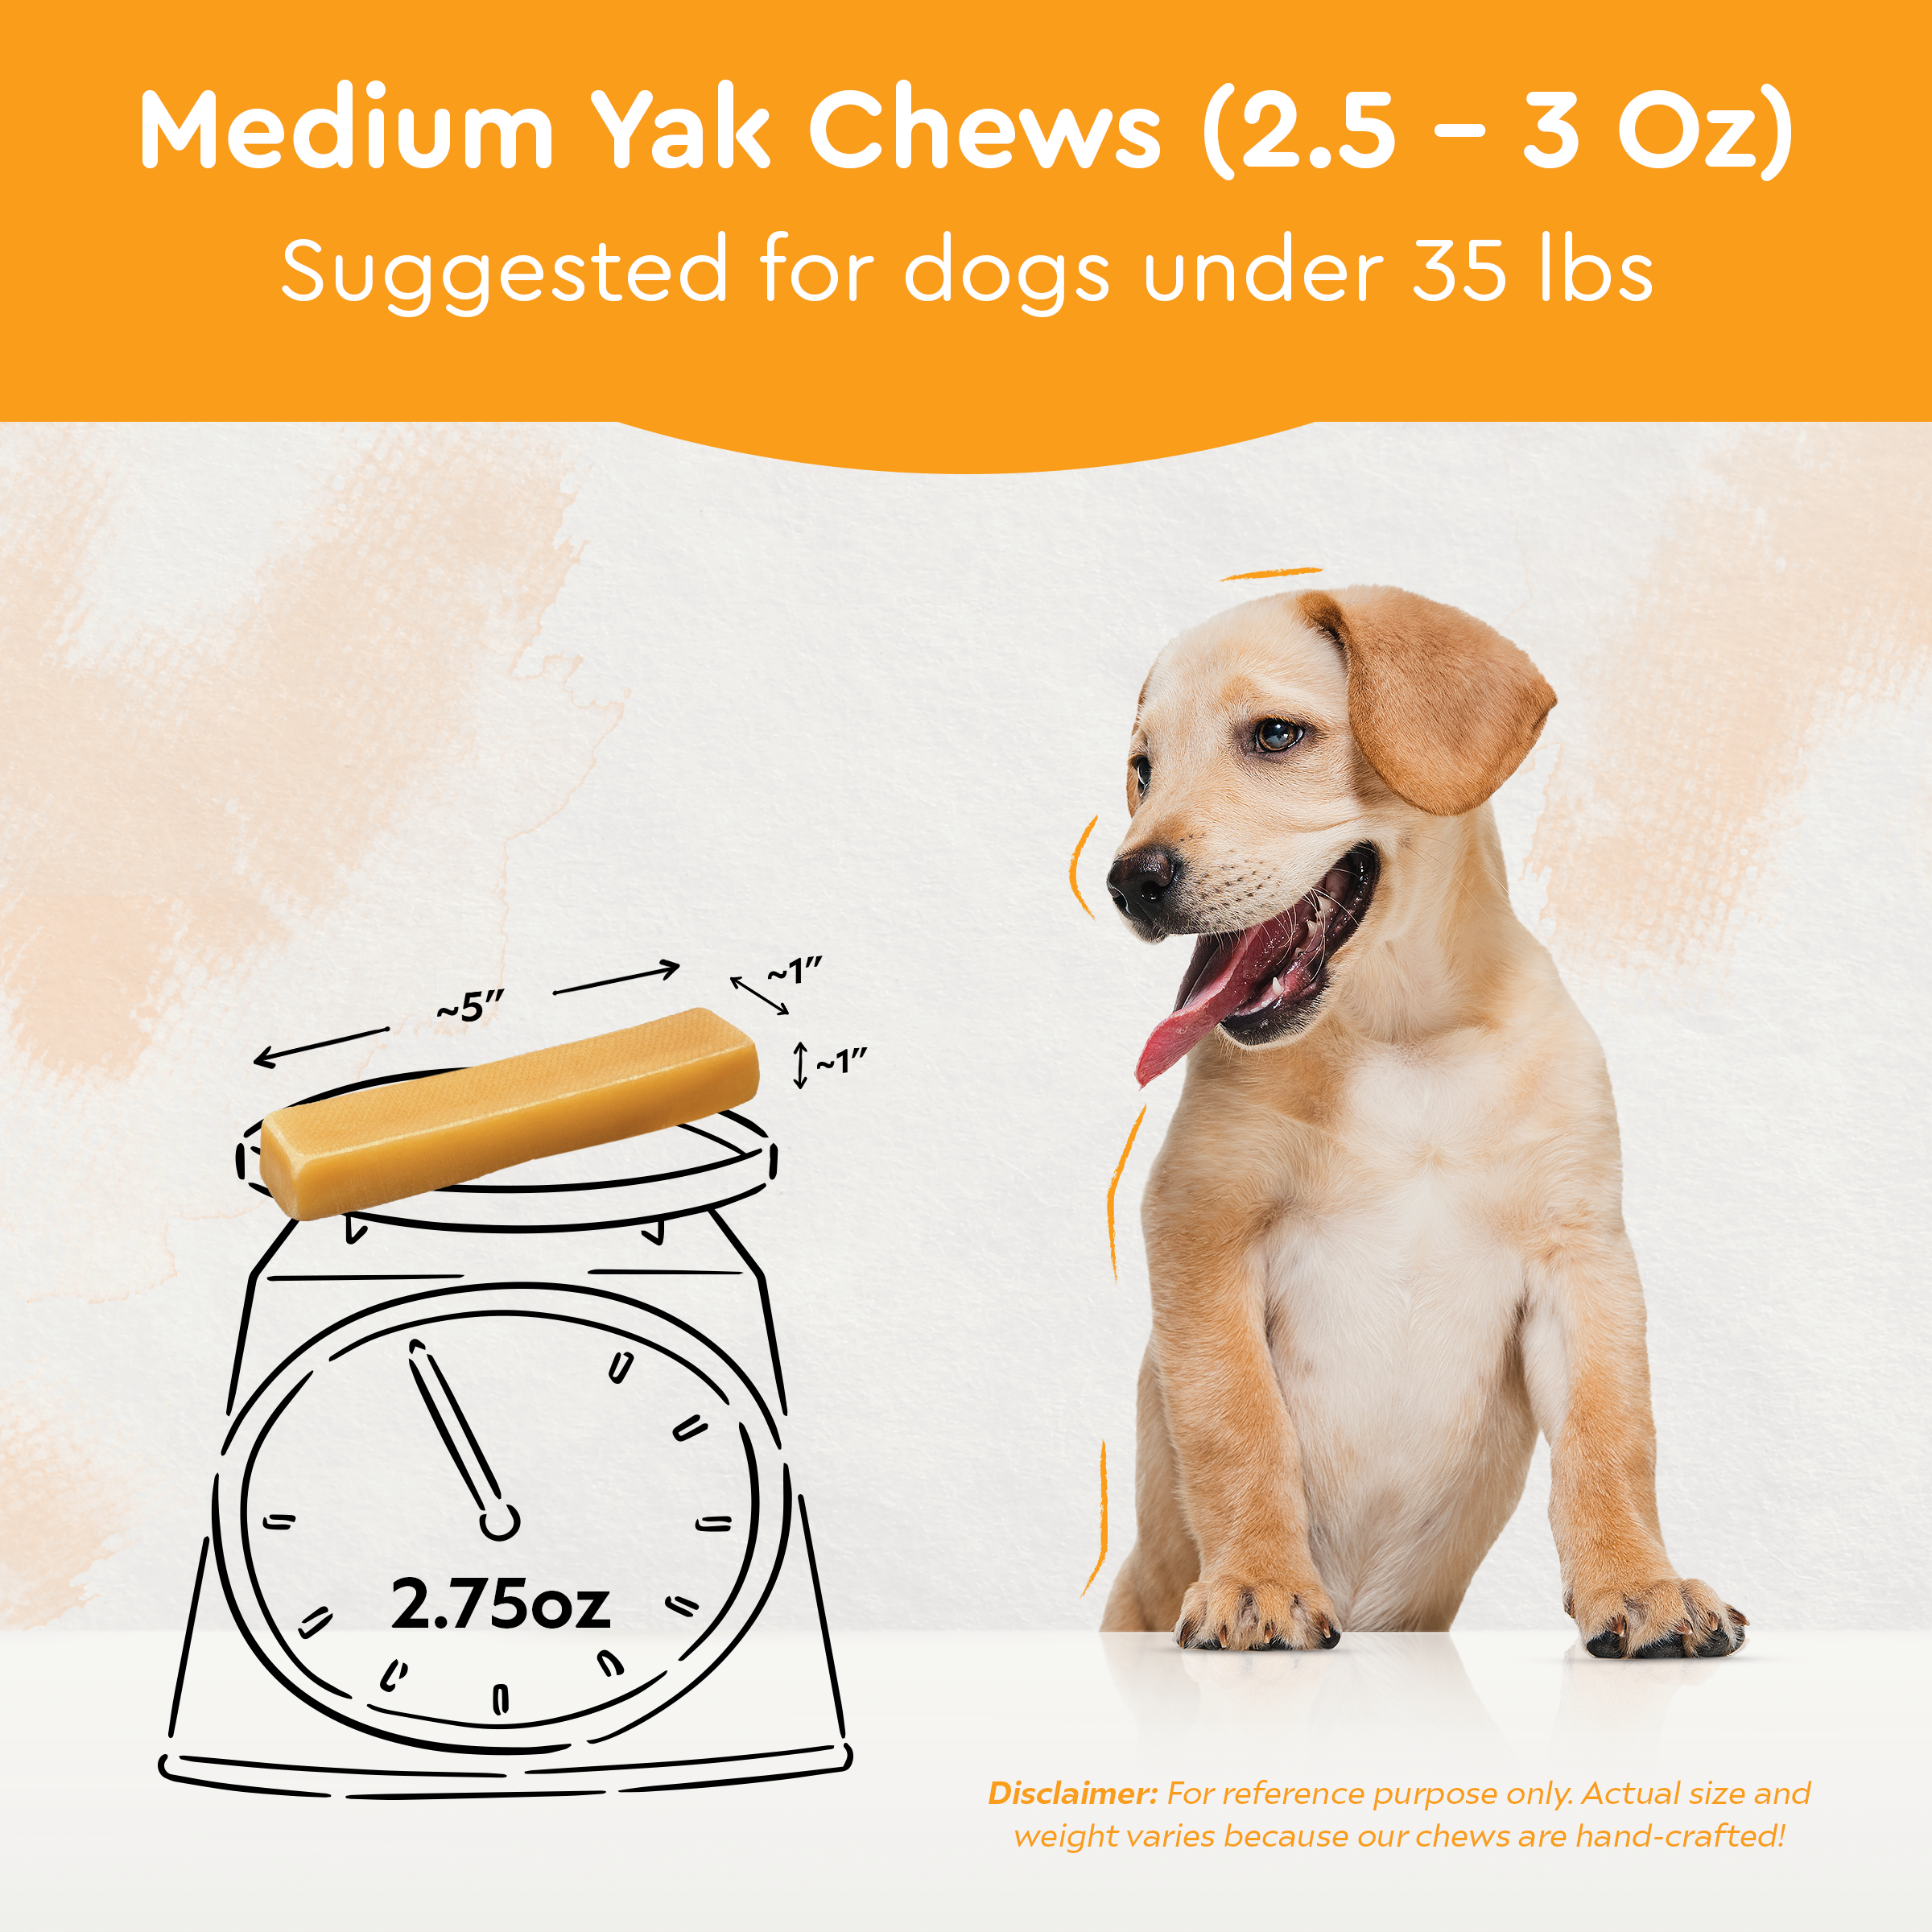 MEDIUM YAKS / Best for dogs under 35 lbs